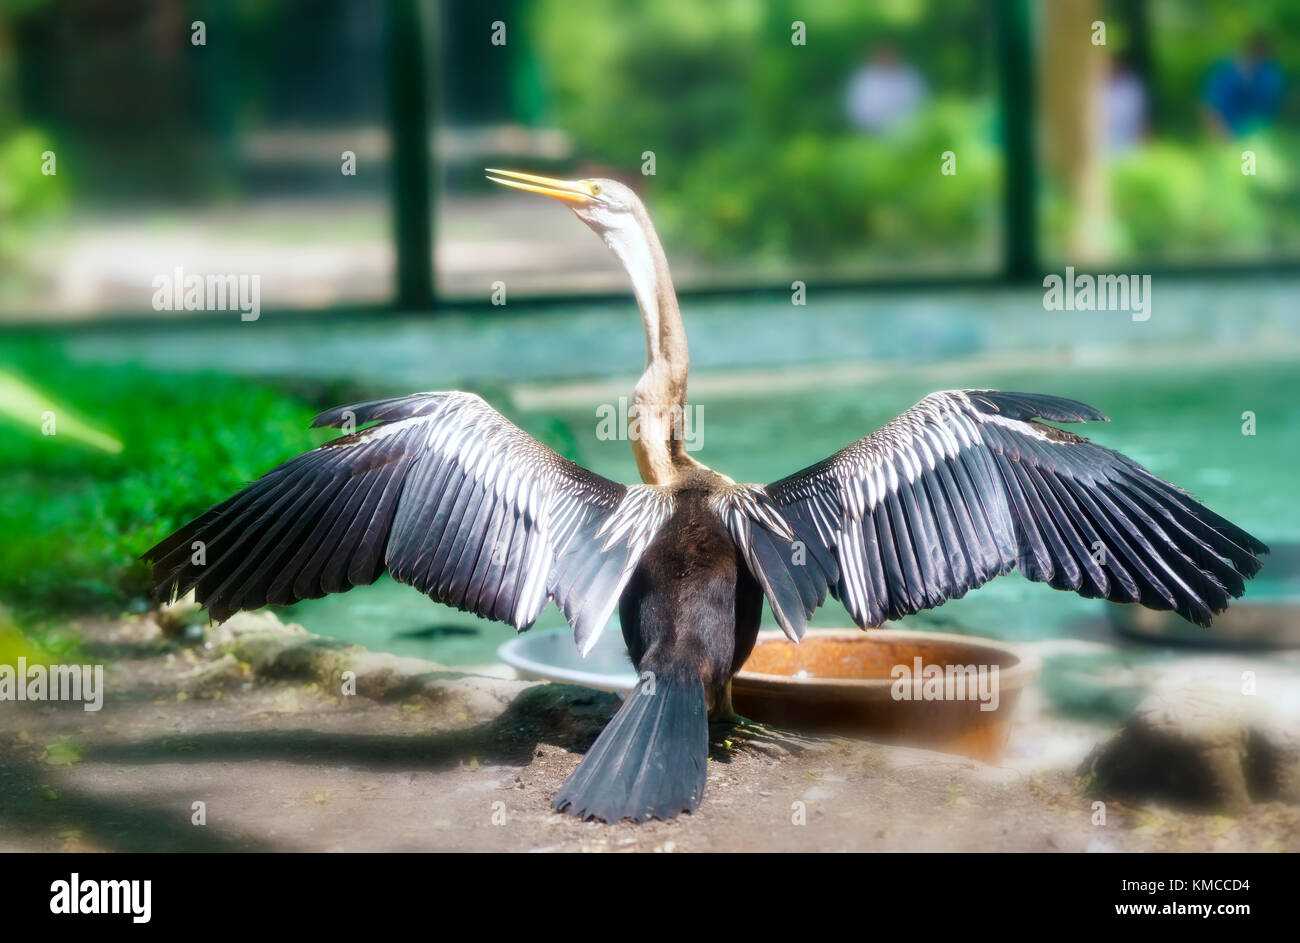 Marabou stork wings spread -Fotos und -Bildmaterial in hoher Auflösung –  Alamy